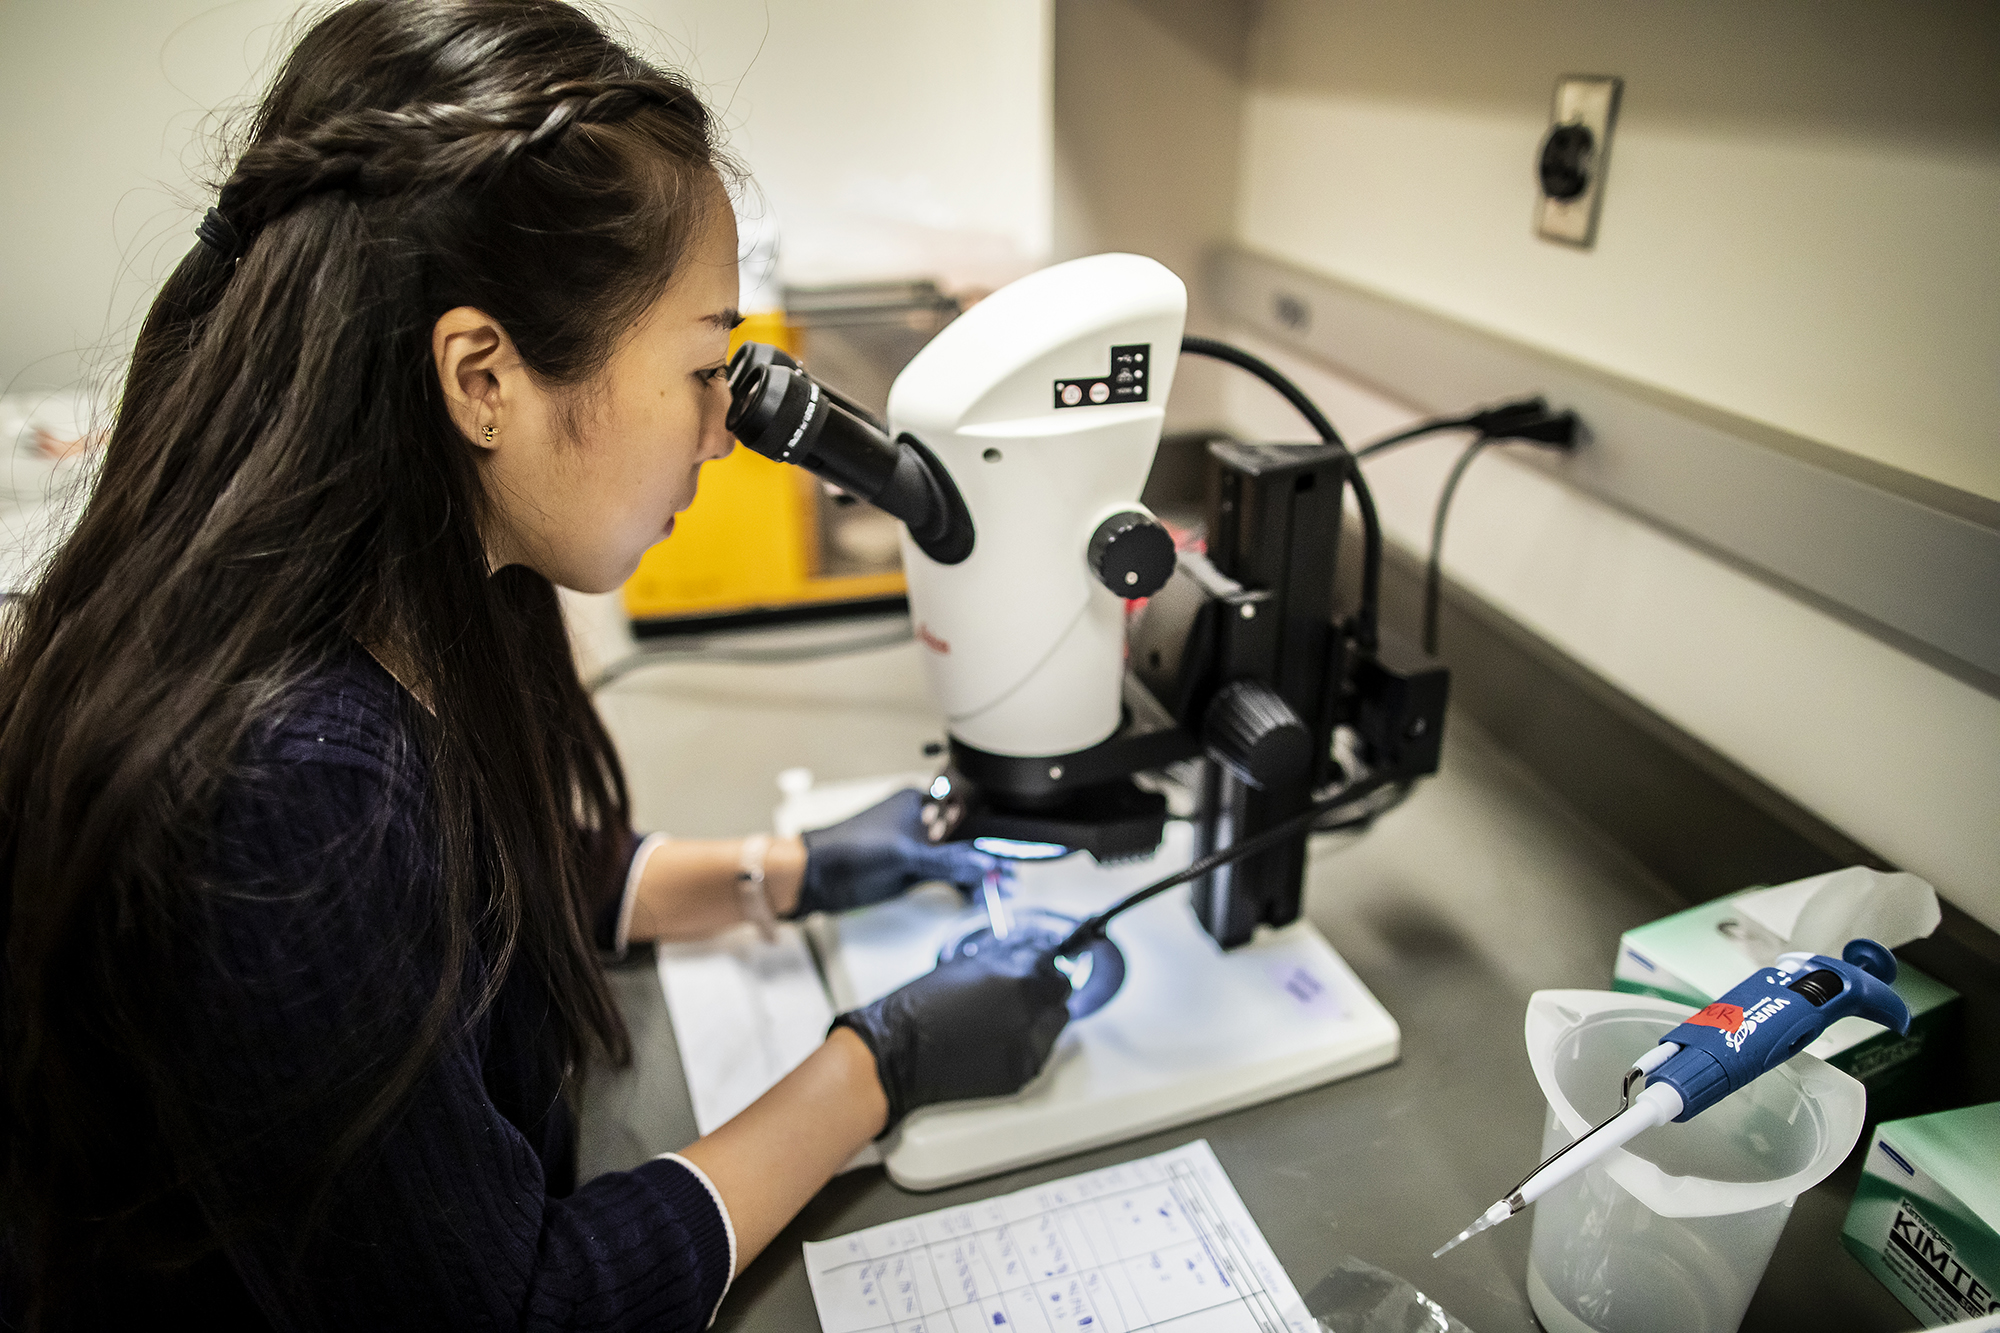 Nova Meng peers through a microscope